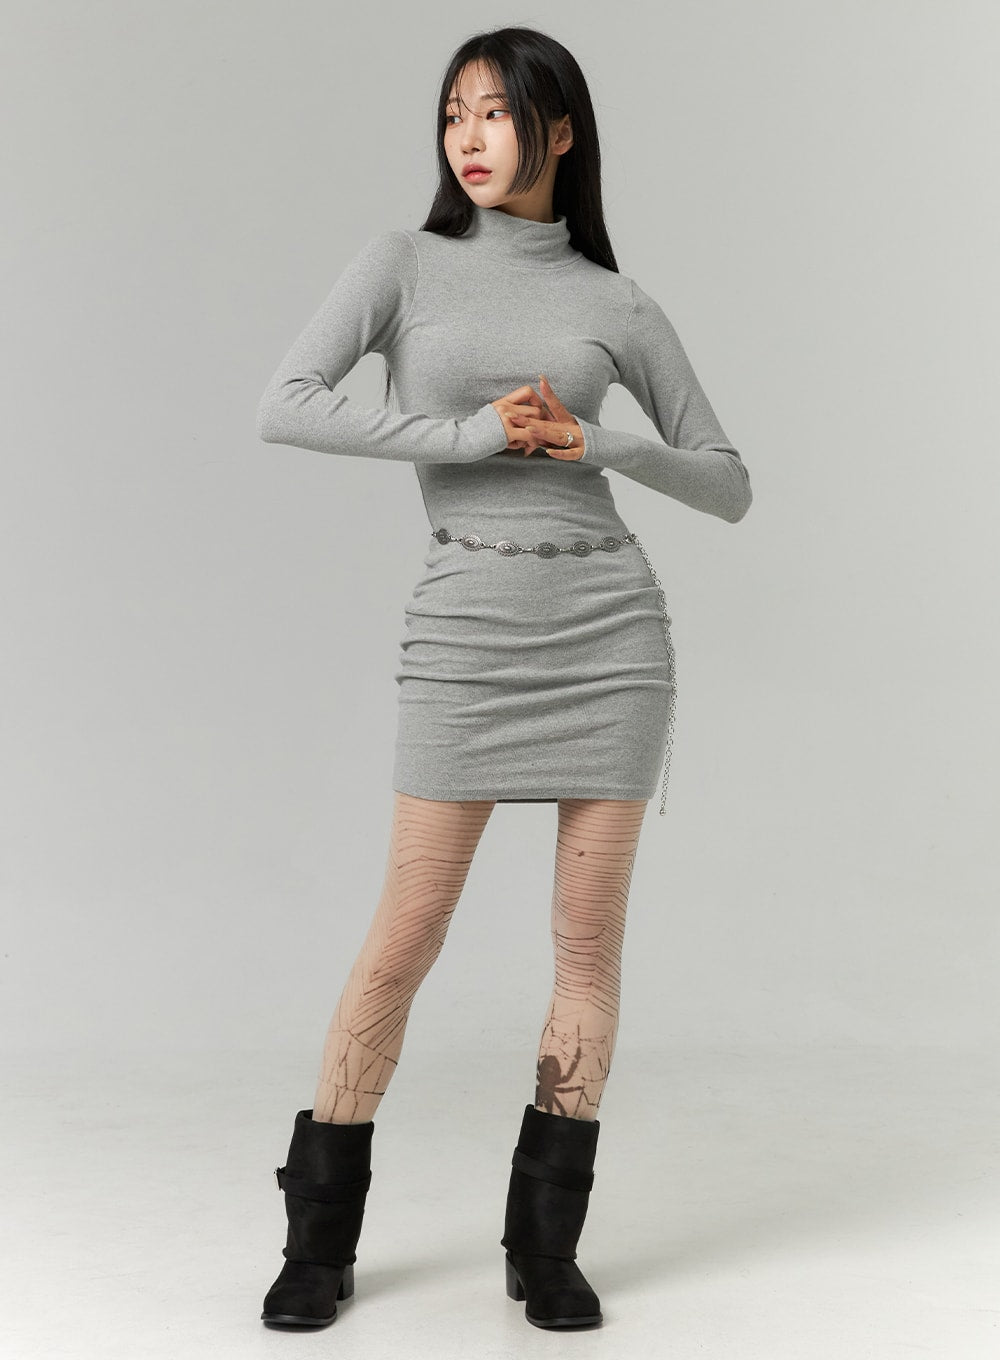 How to Wear a Grey Turtleneck Sweater Dress